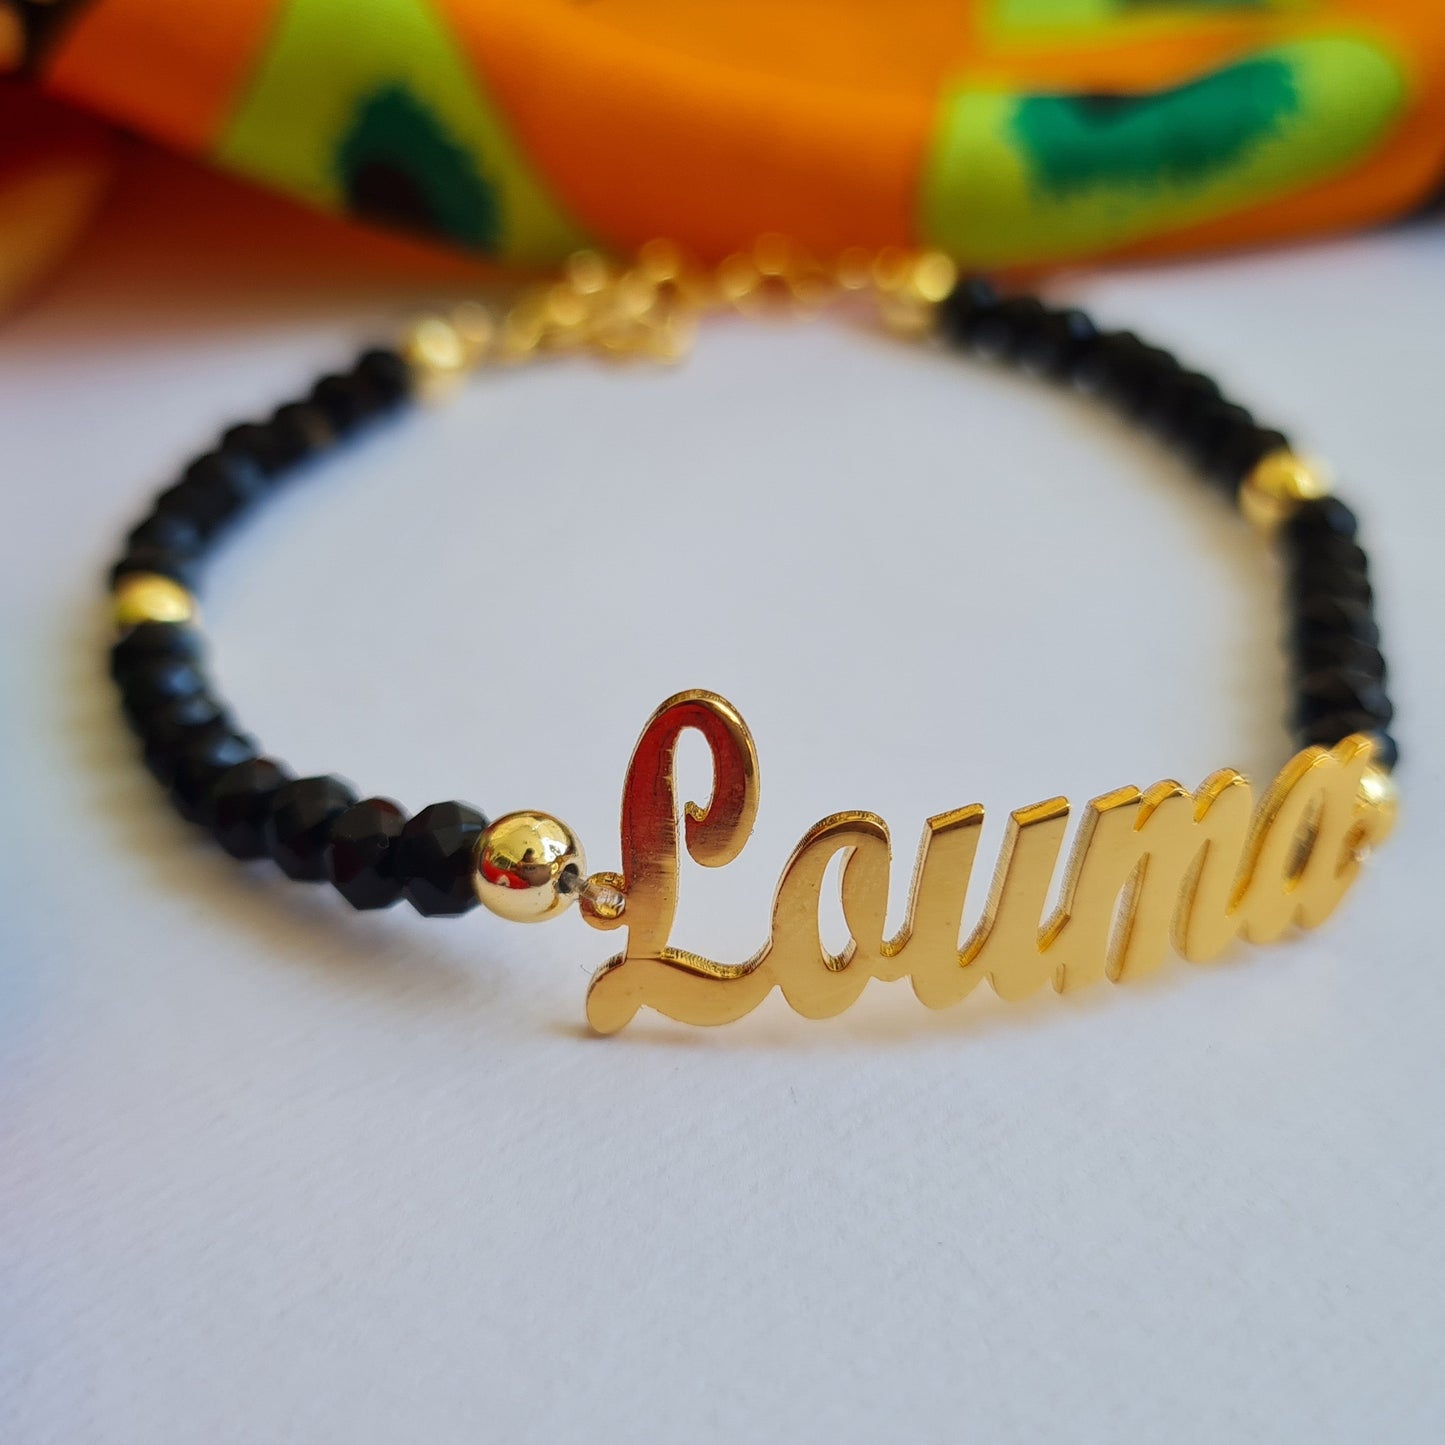 Customizable "Name, drawing" crystal beads bracelet